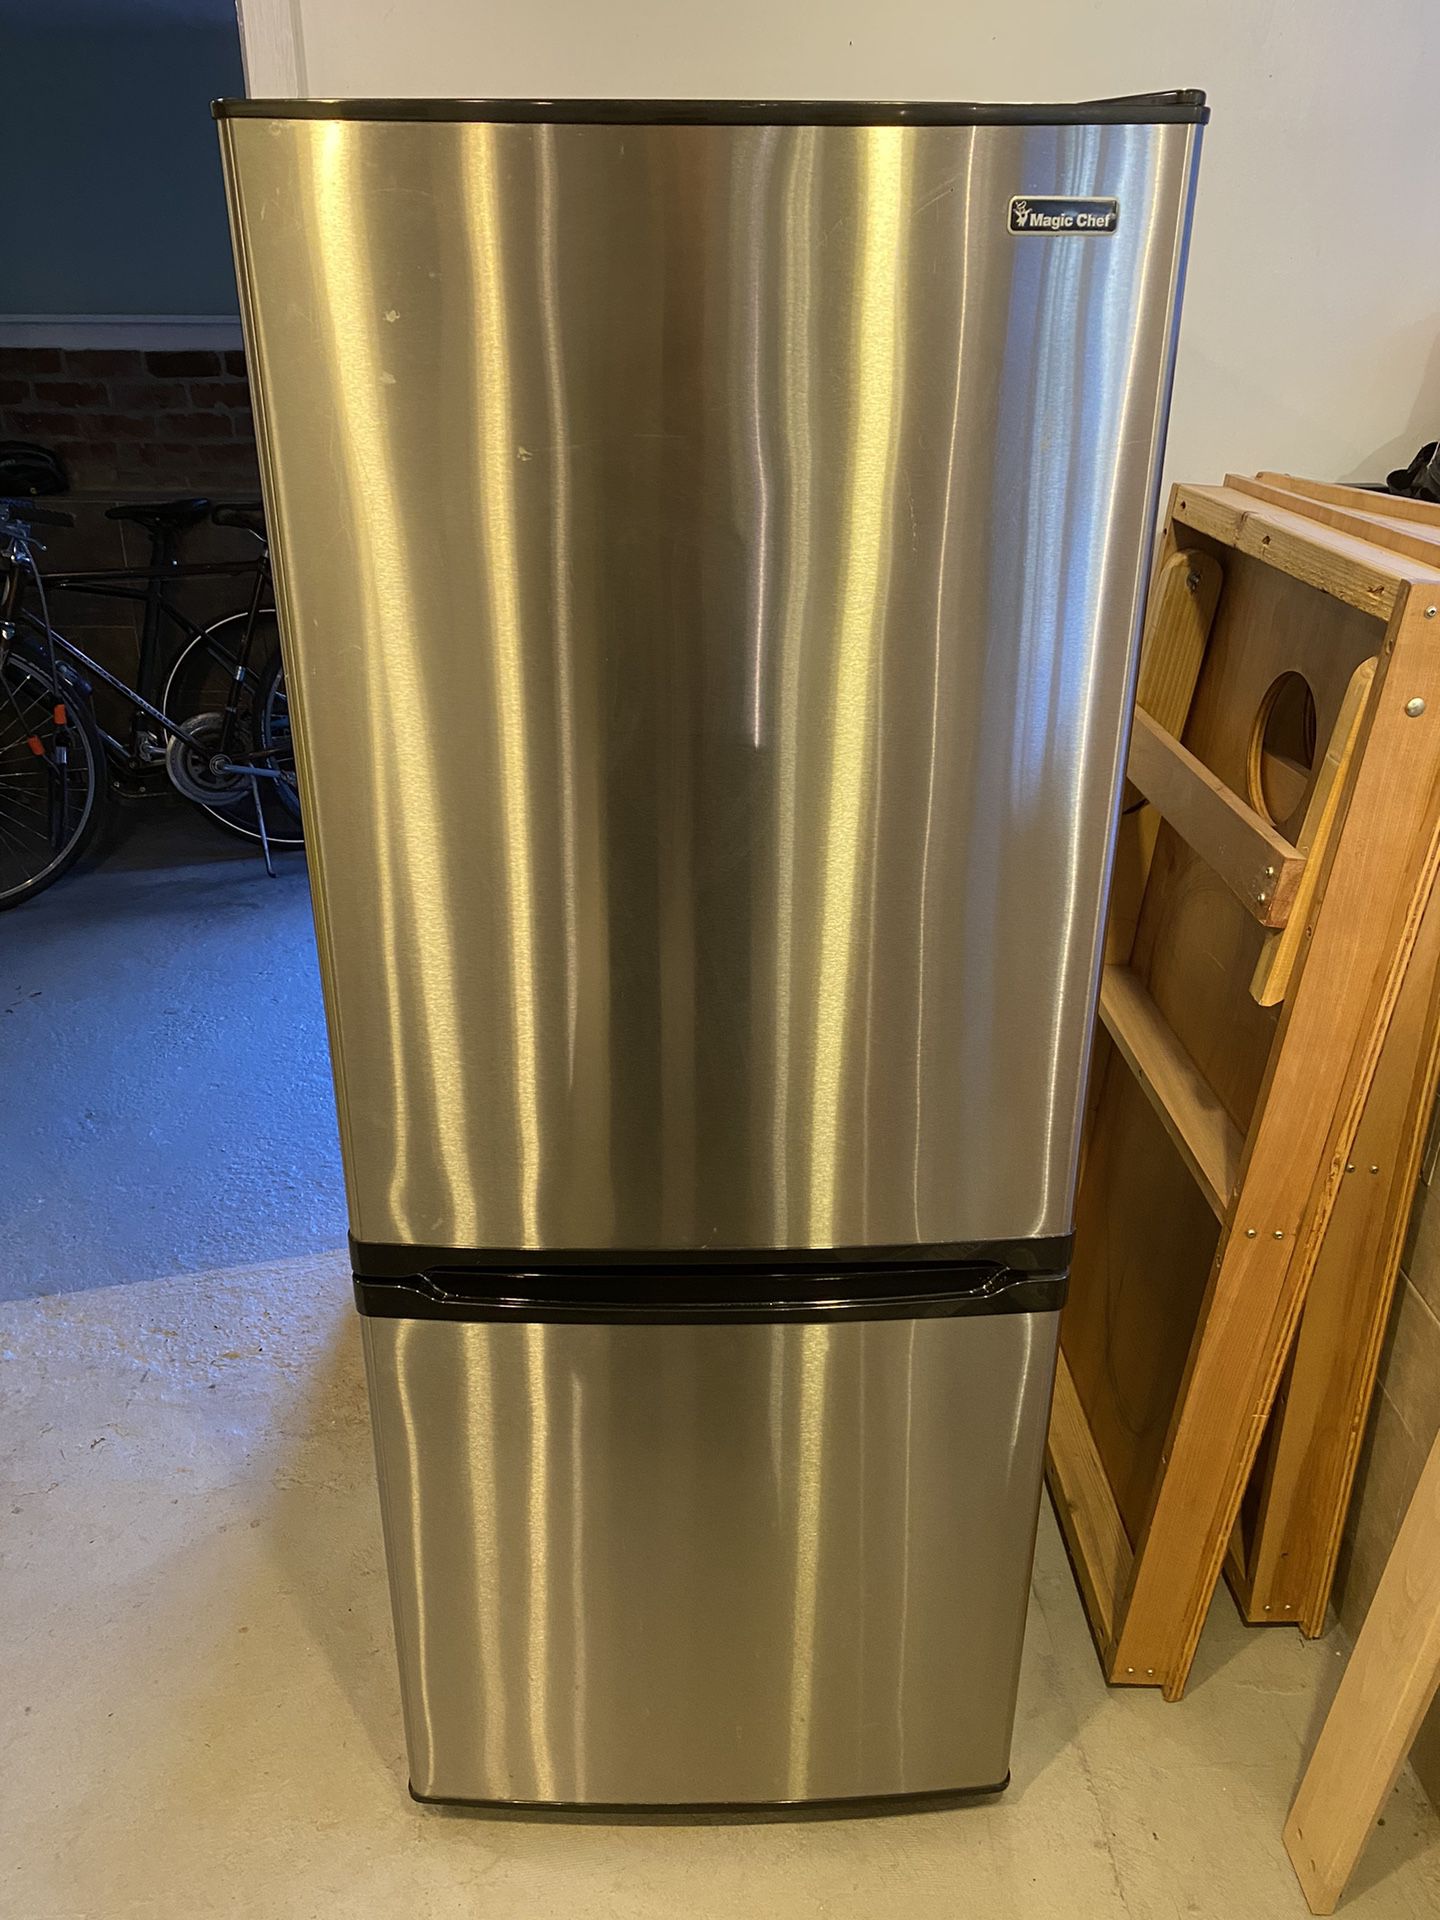 Magic Chef Bottom Freezer Refrigerator (Stainless Steel)